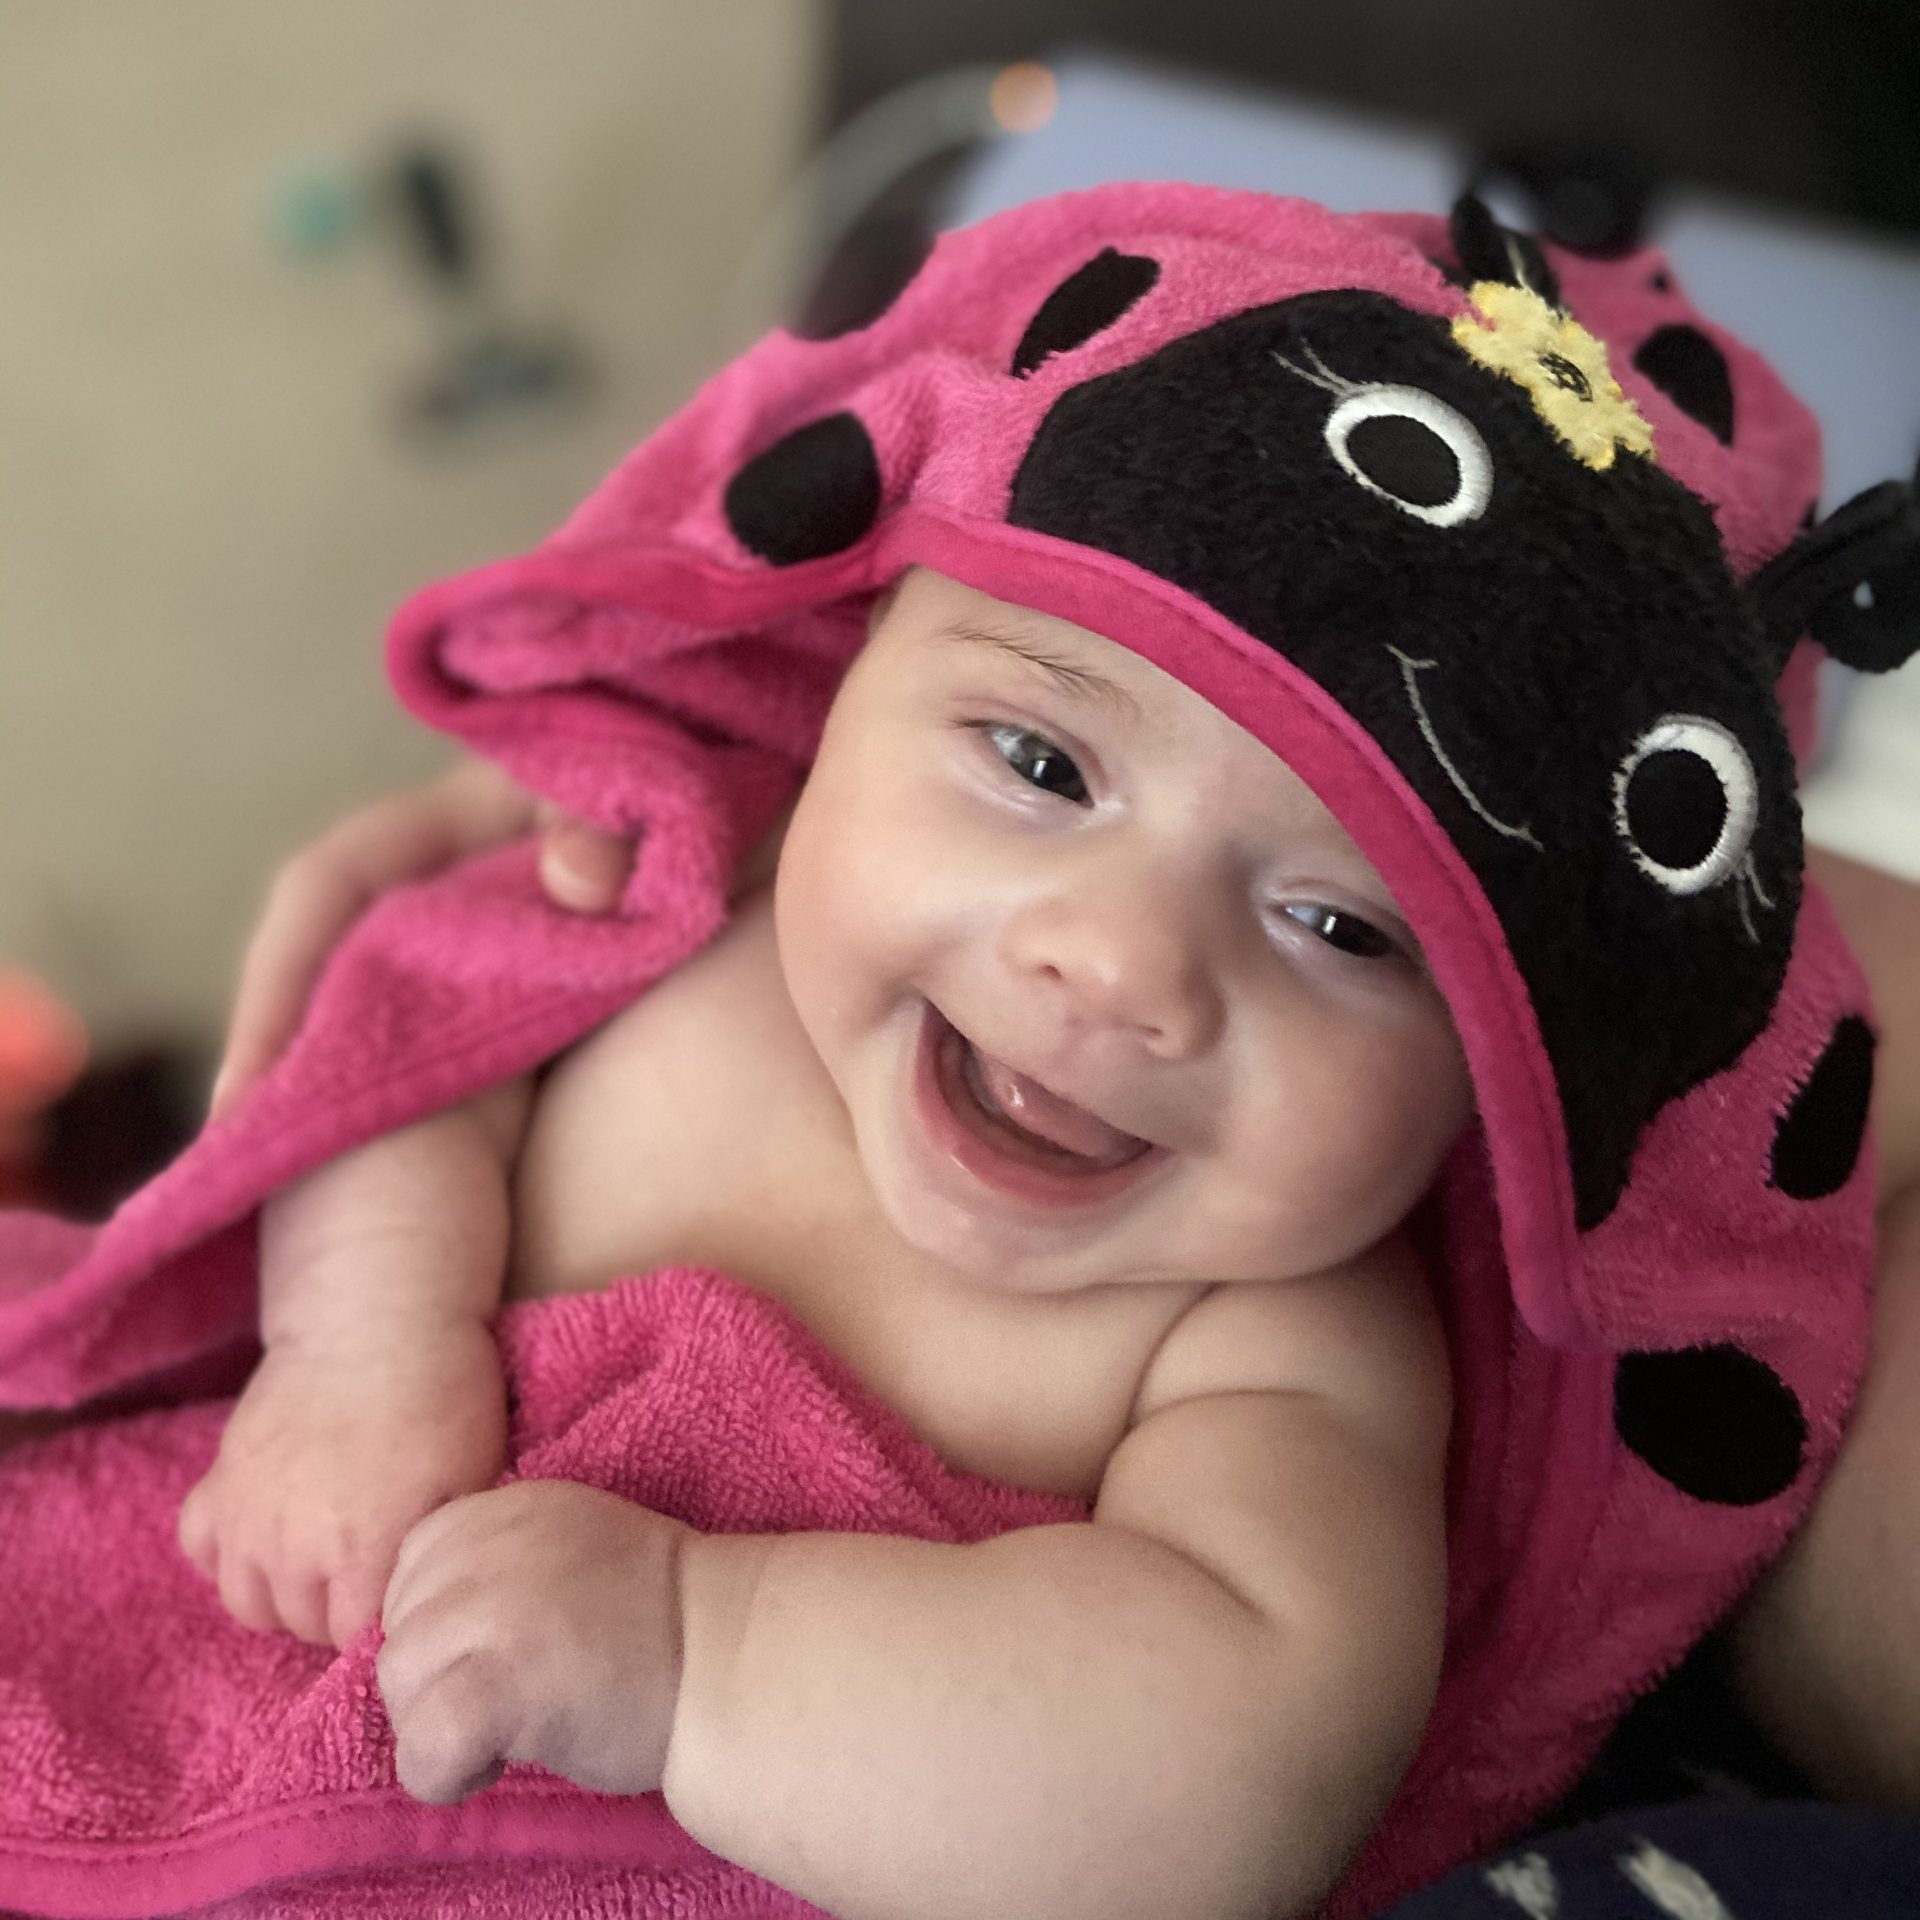 Baby save Daisy wears a ladybug towel.